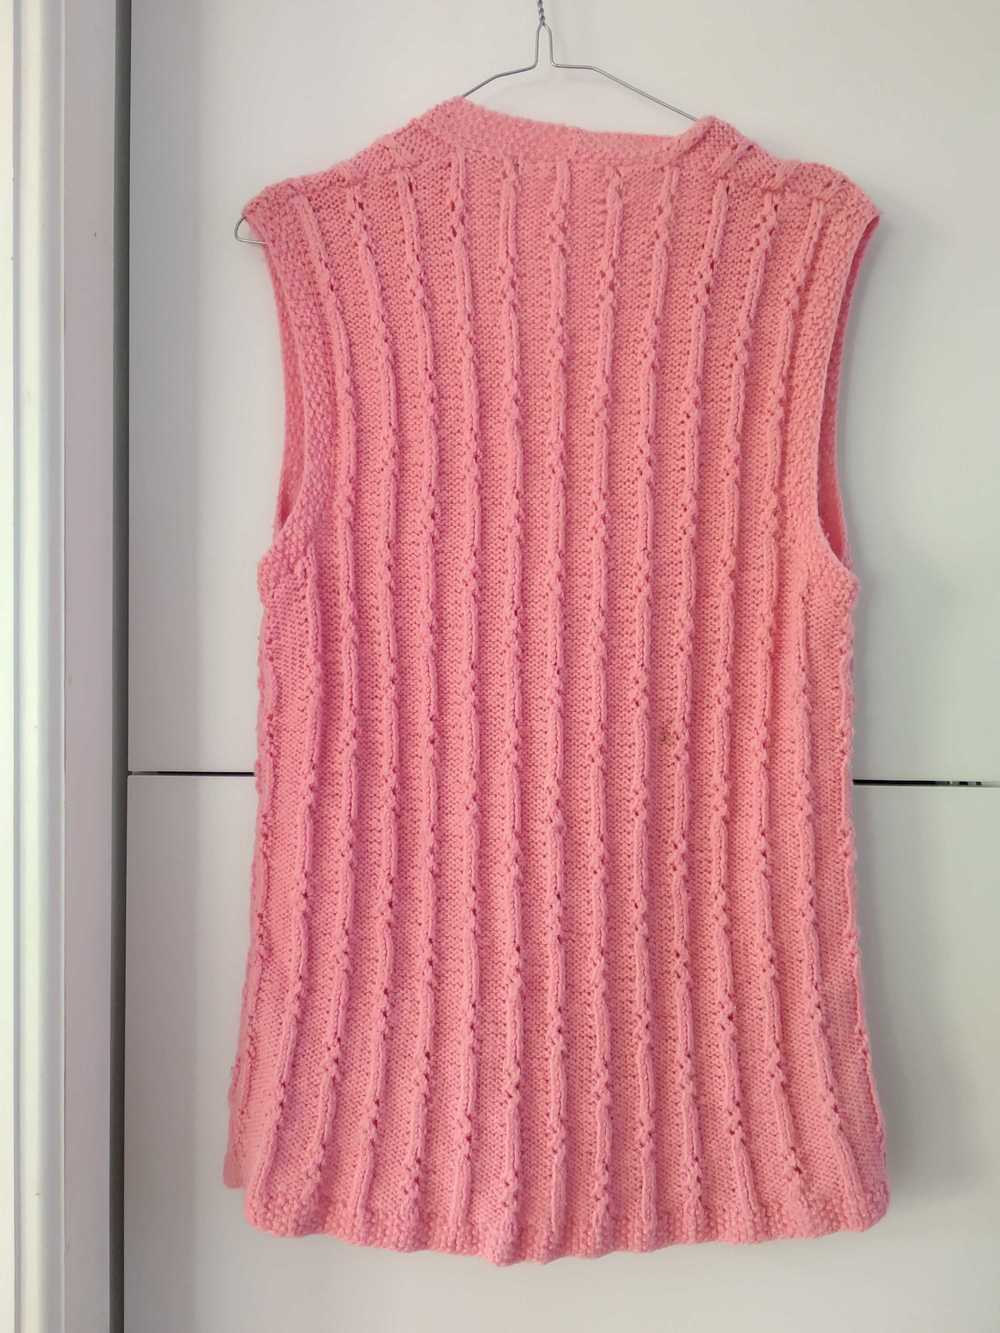 Knit vest - Handmade/ handmade pink sleeveless kn… - image 3